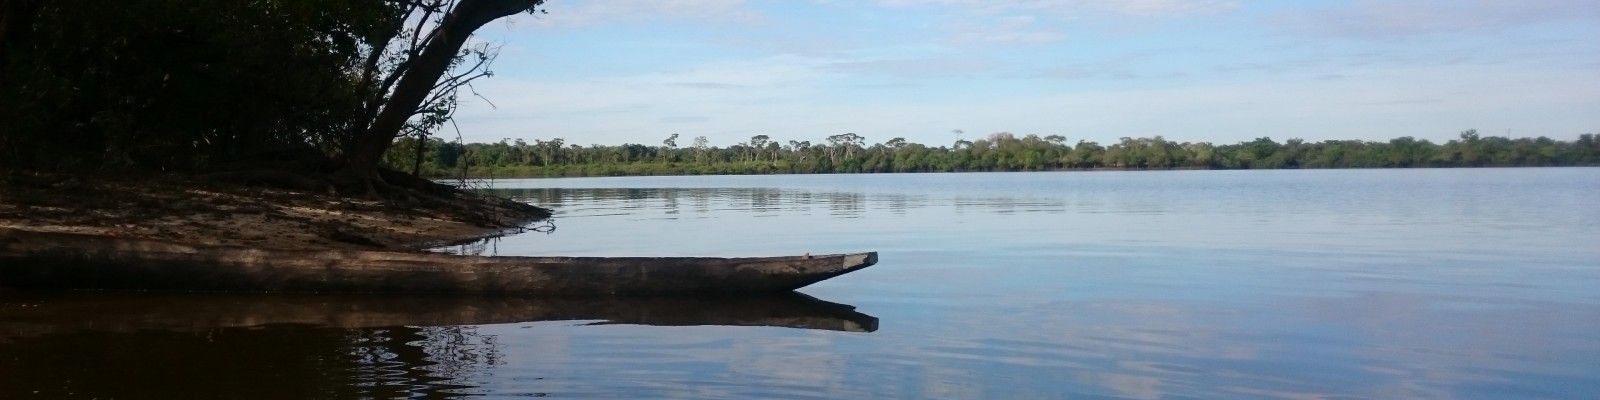 Am Xingu im brasilianischen Amazonas-Gebiet